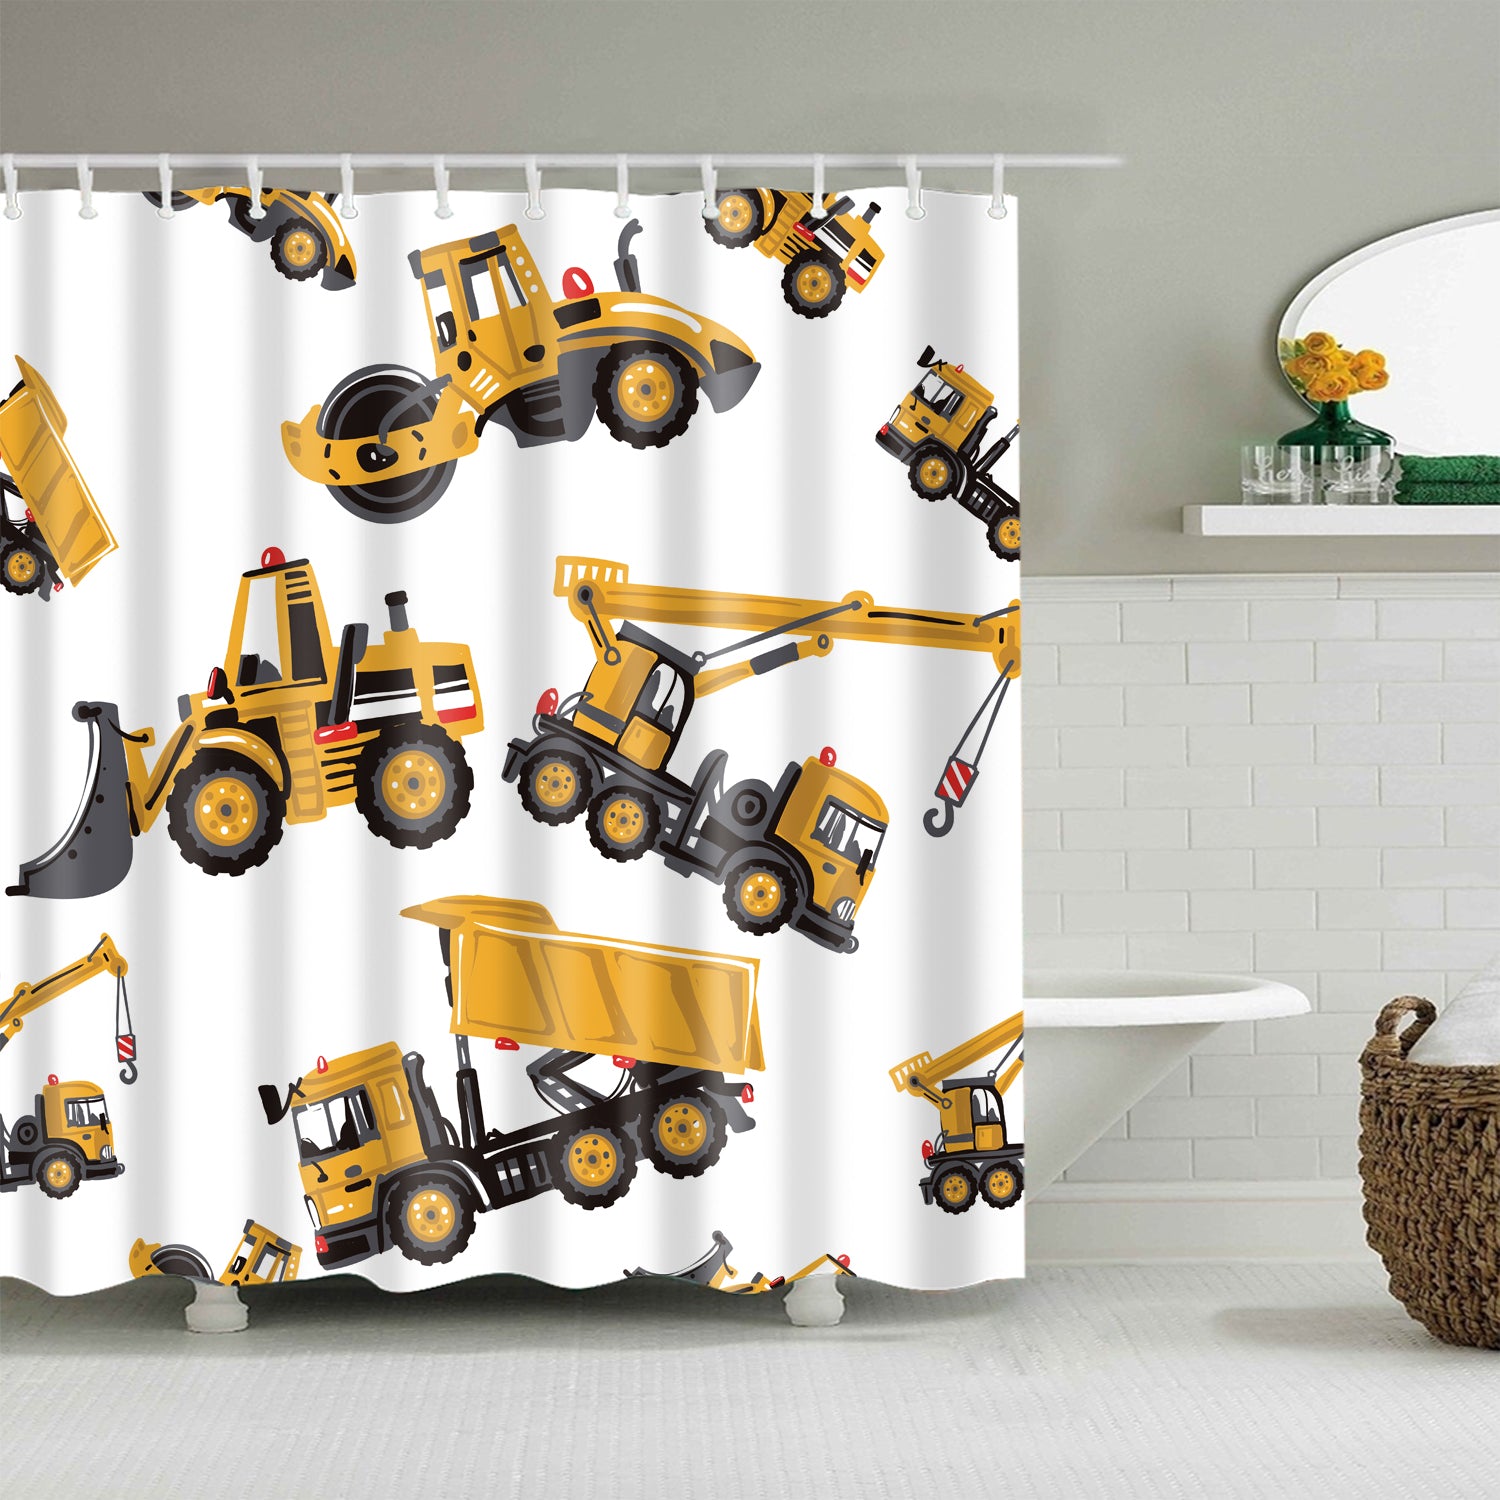 Yellow Cartoon Excavator Truck Shower Curtain Kids Construction Bathroom Decor